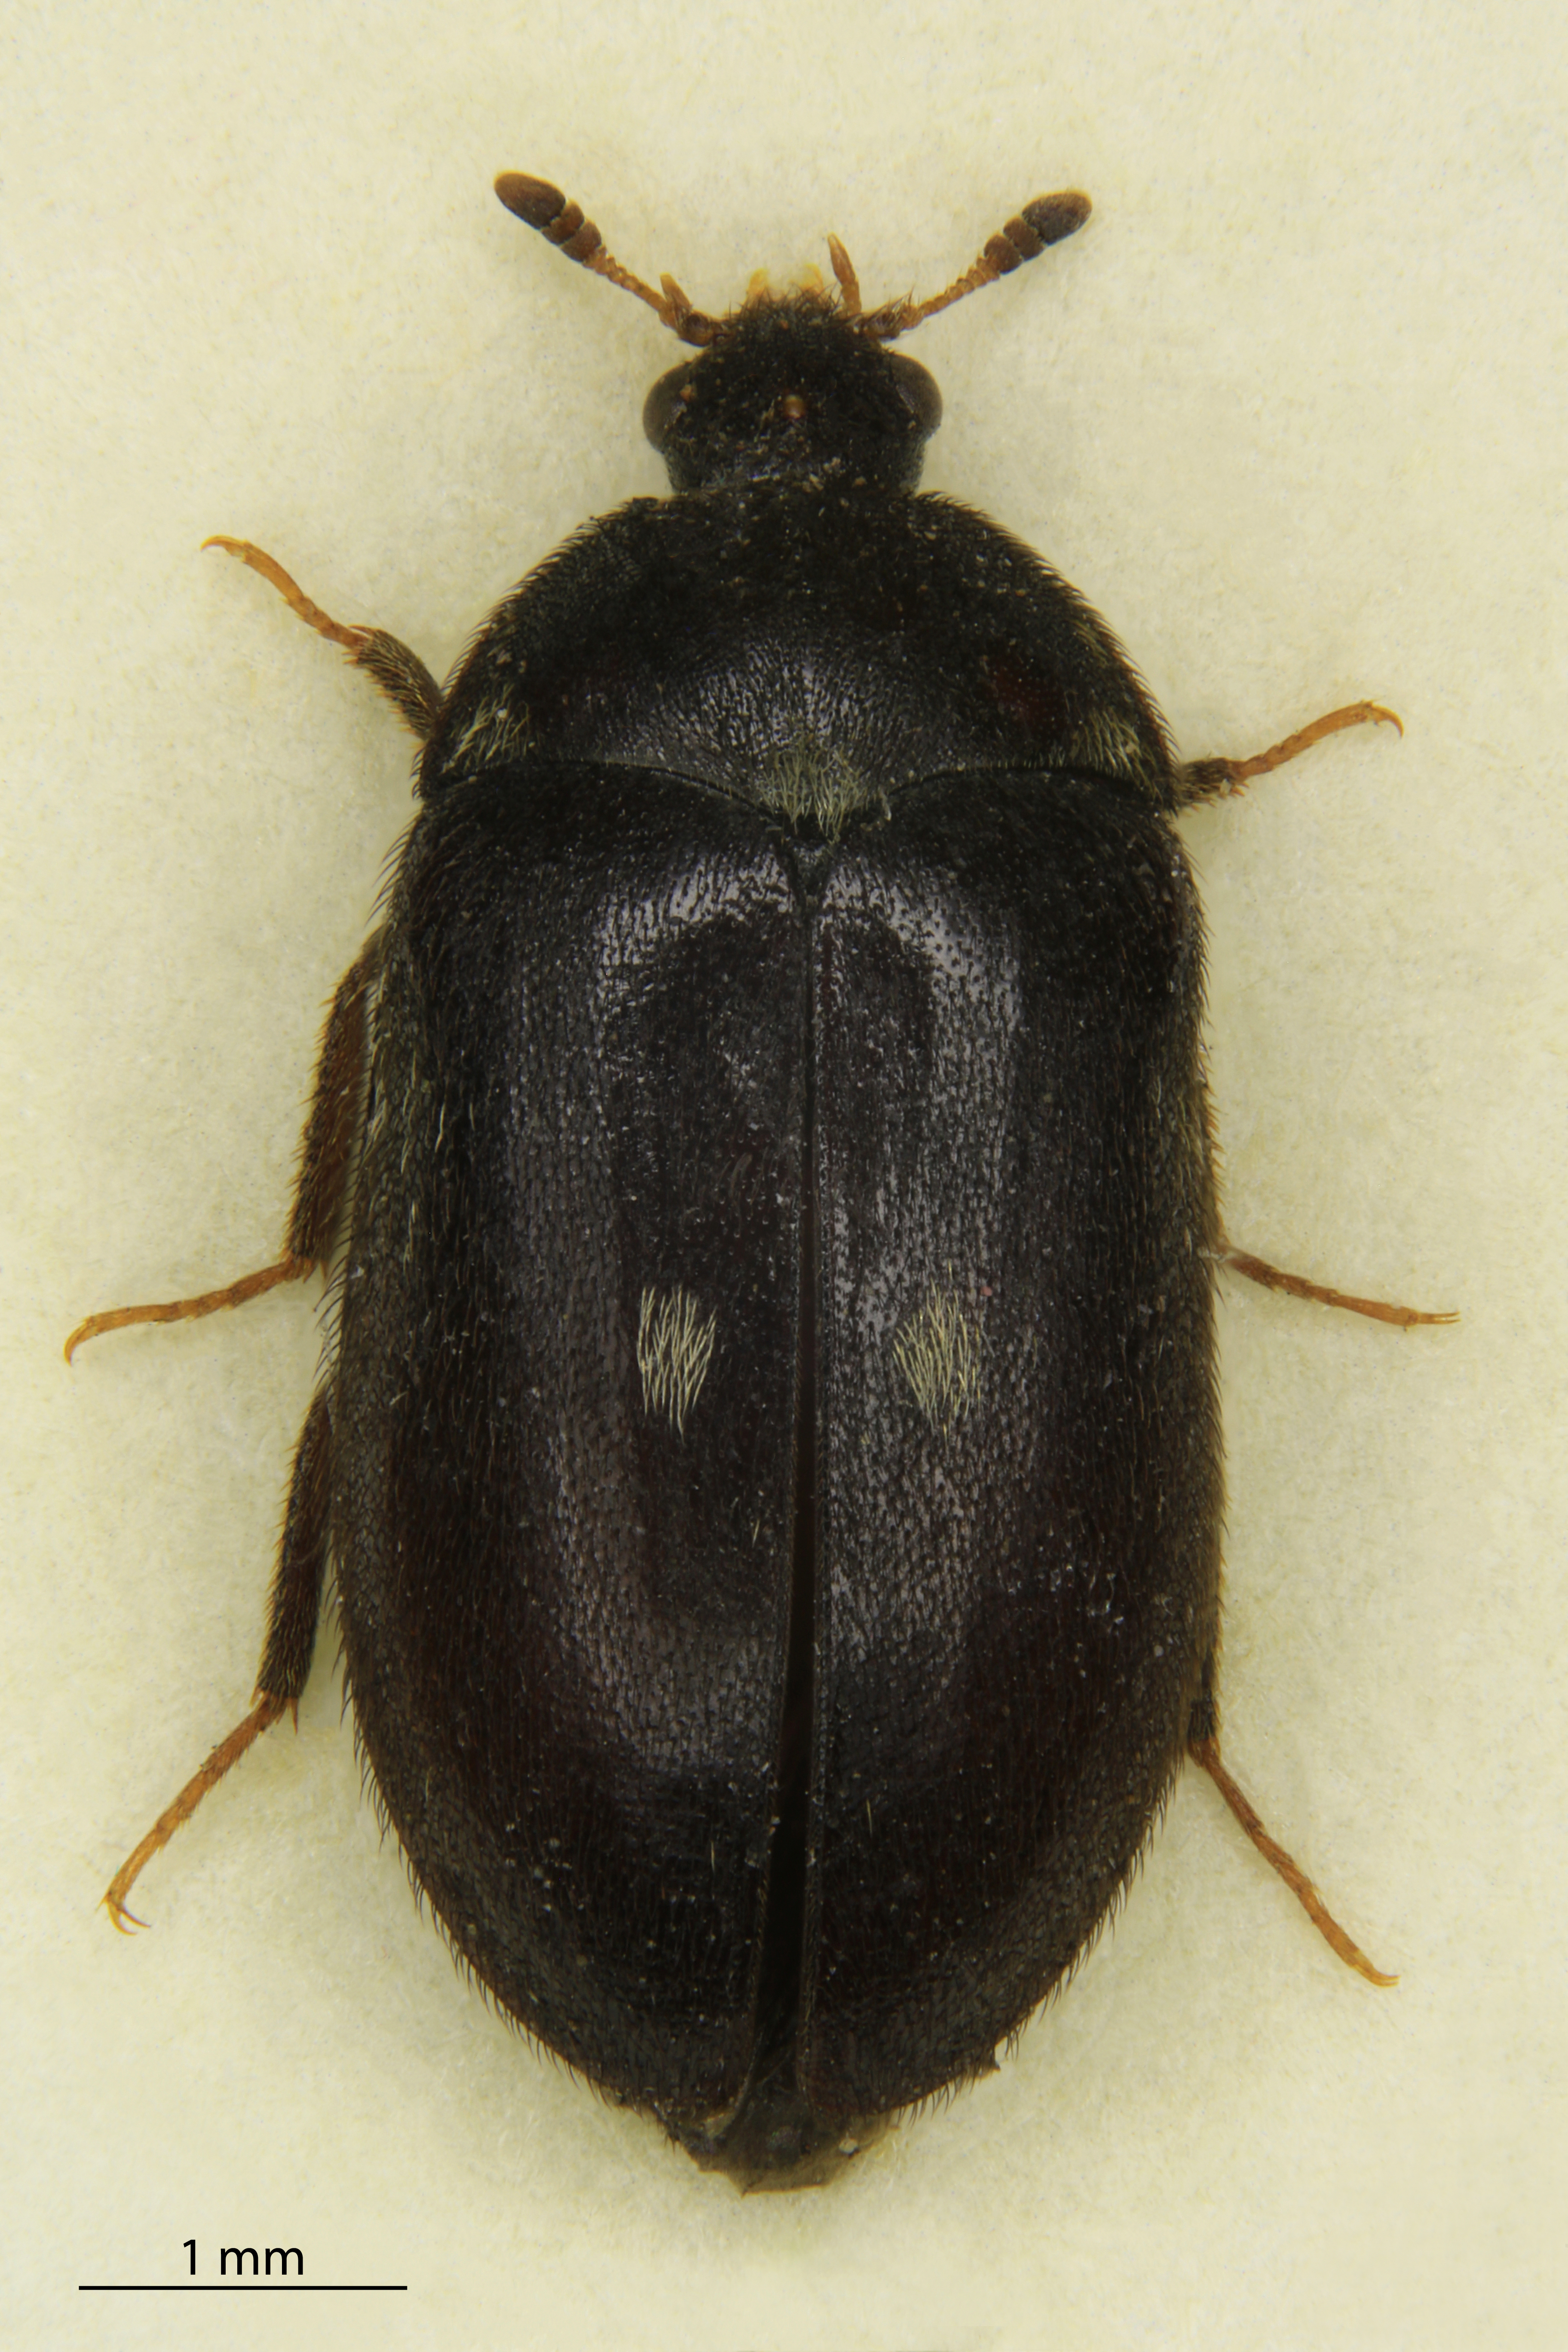 Specimen of a Two-spot carpet beetle